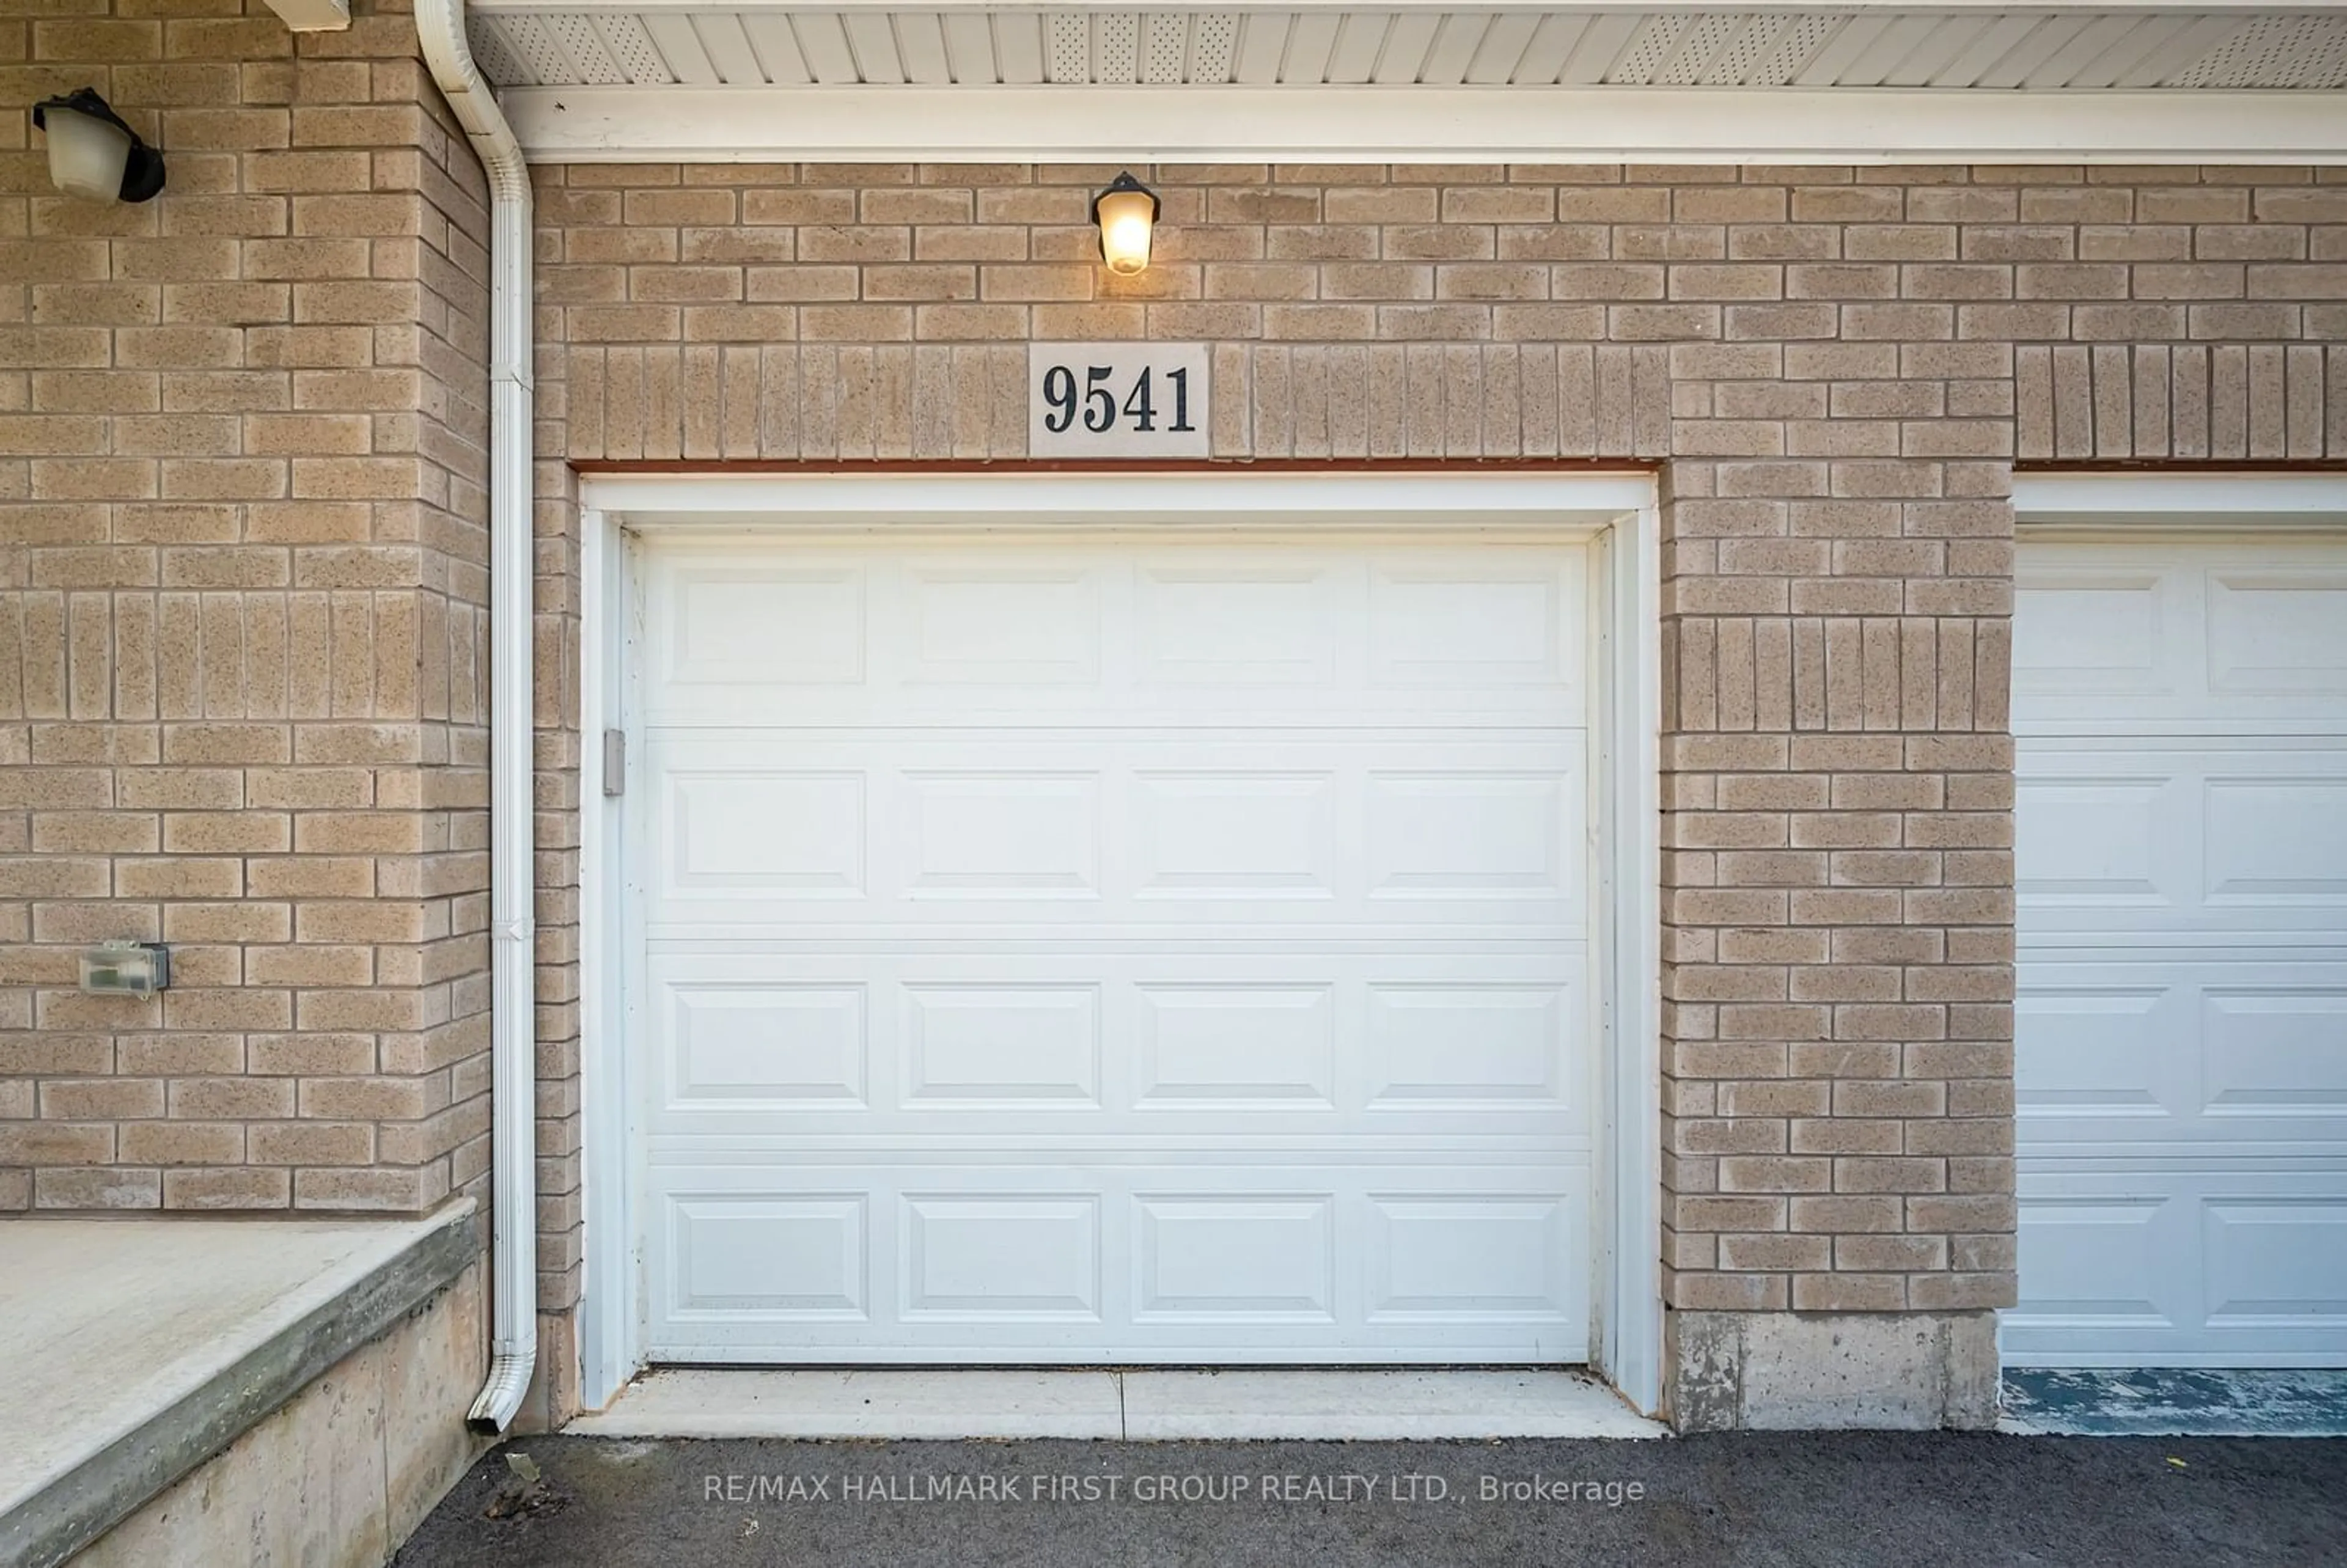 Indoor garage for 9541 Tallgrass Ave, Niagara Falls Ontario L2G 0Y2